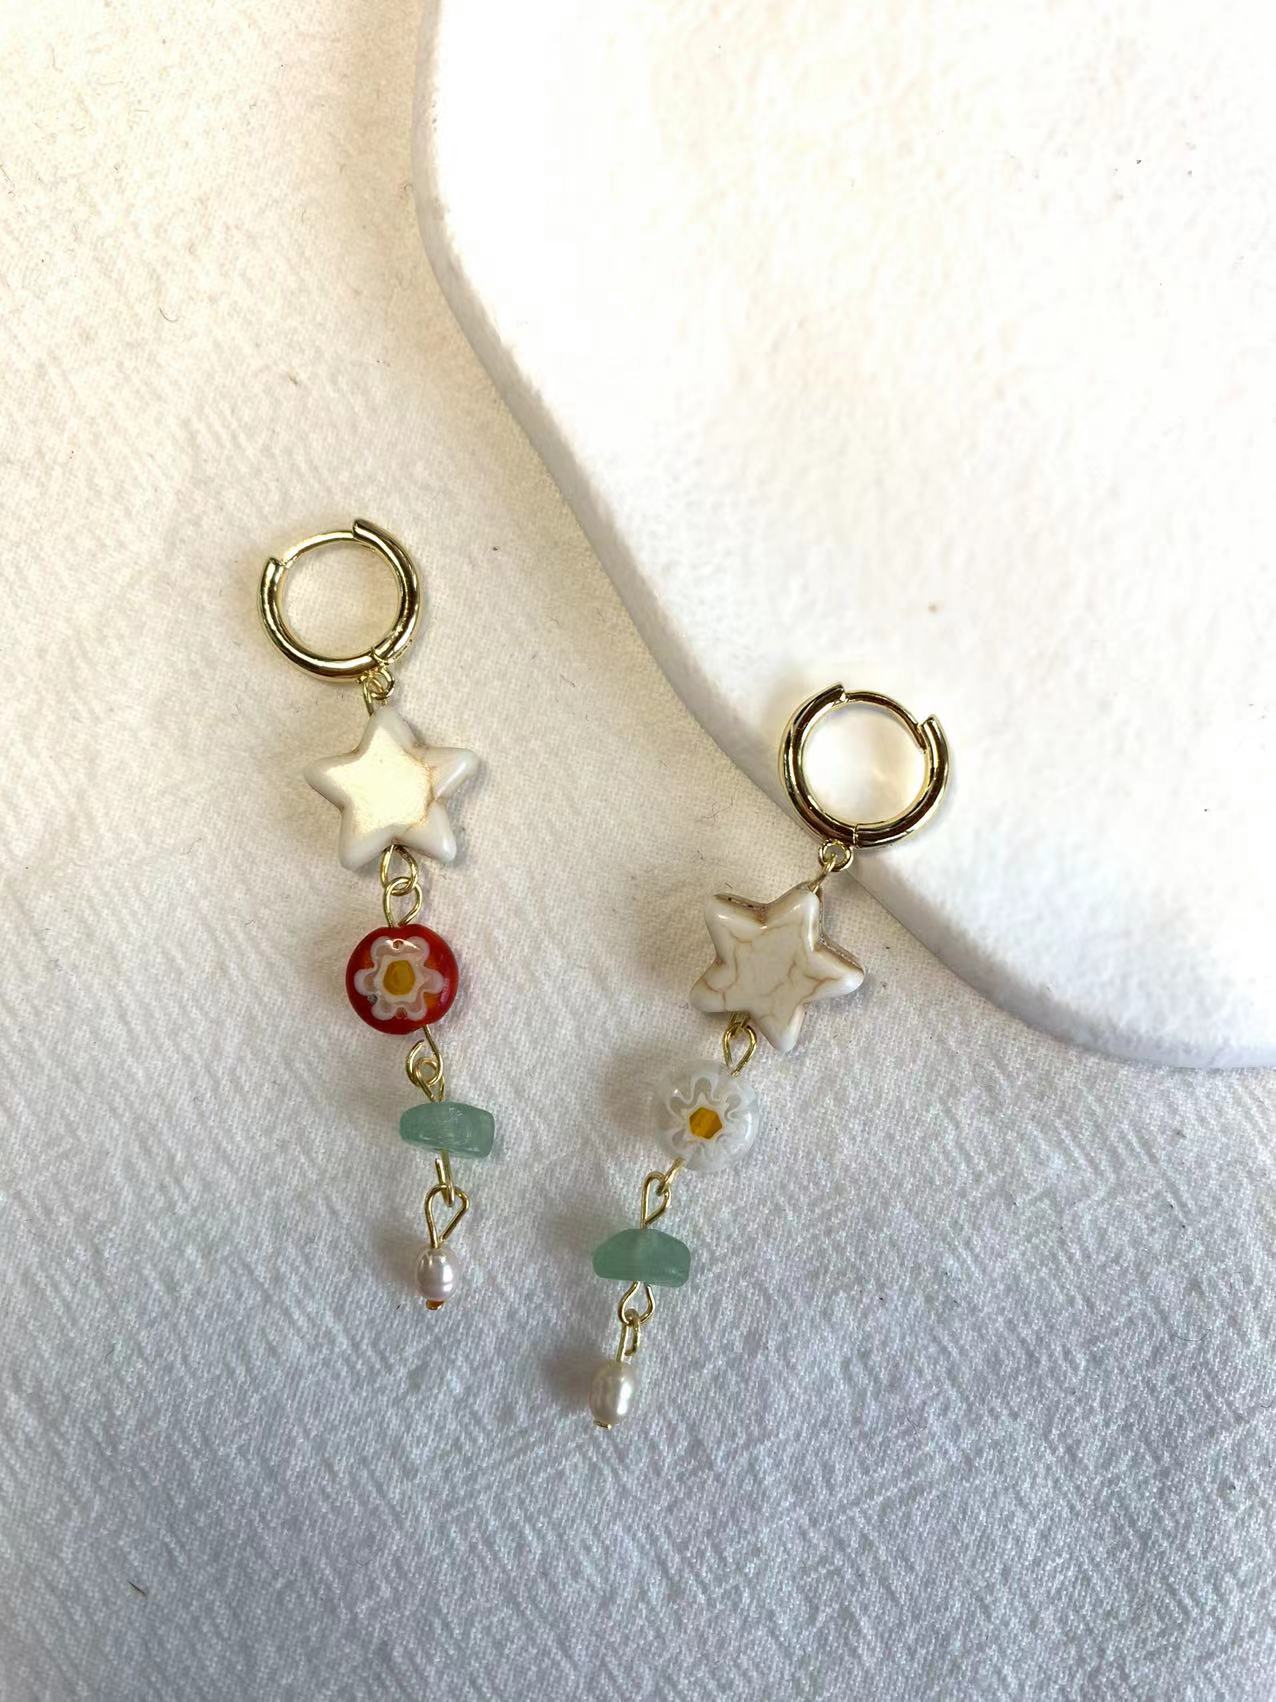 Five-pointed star gravel earrings